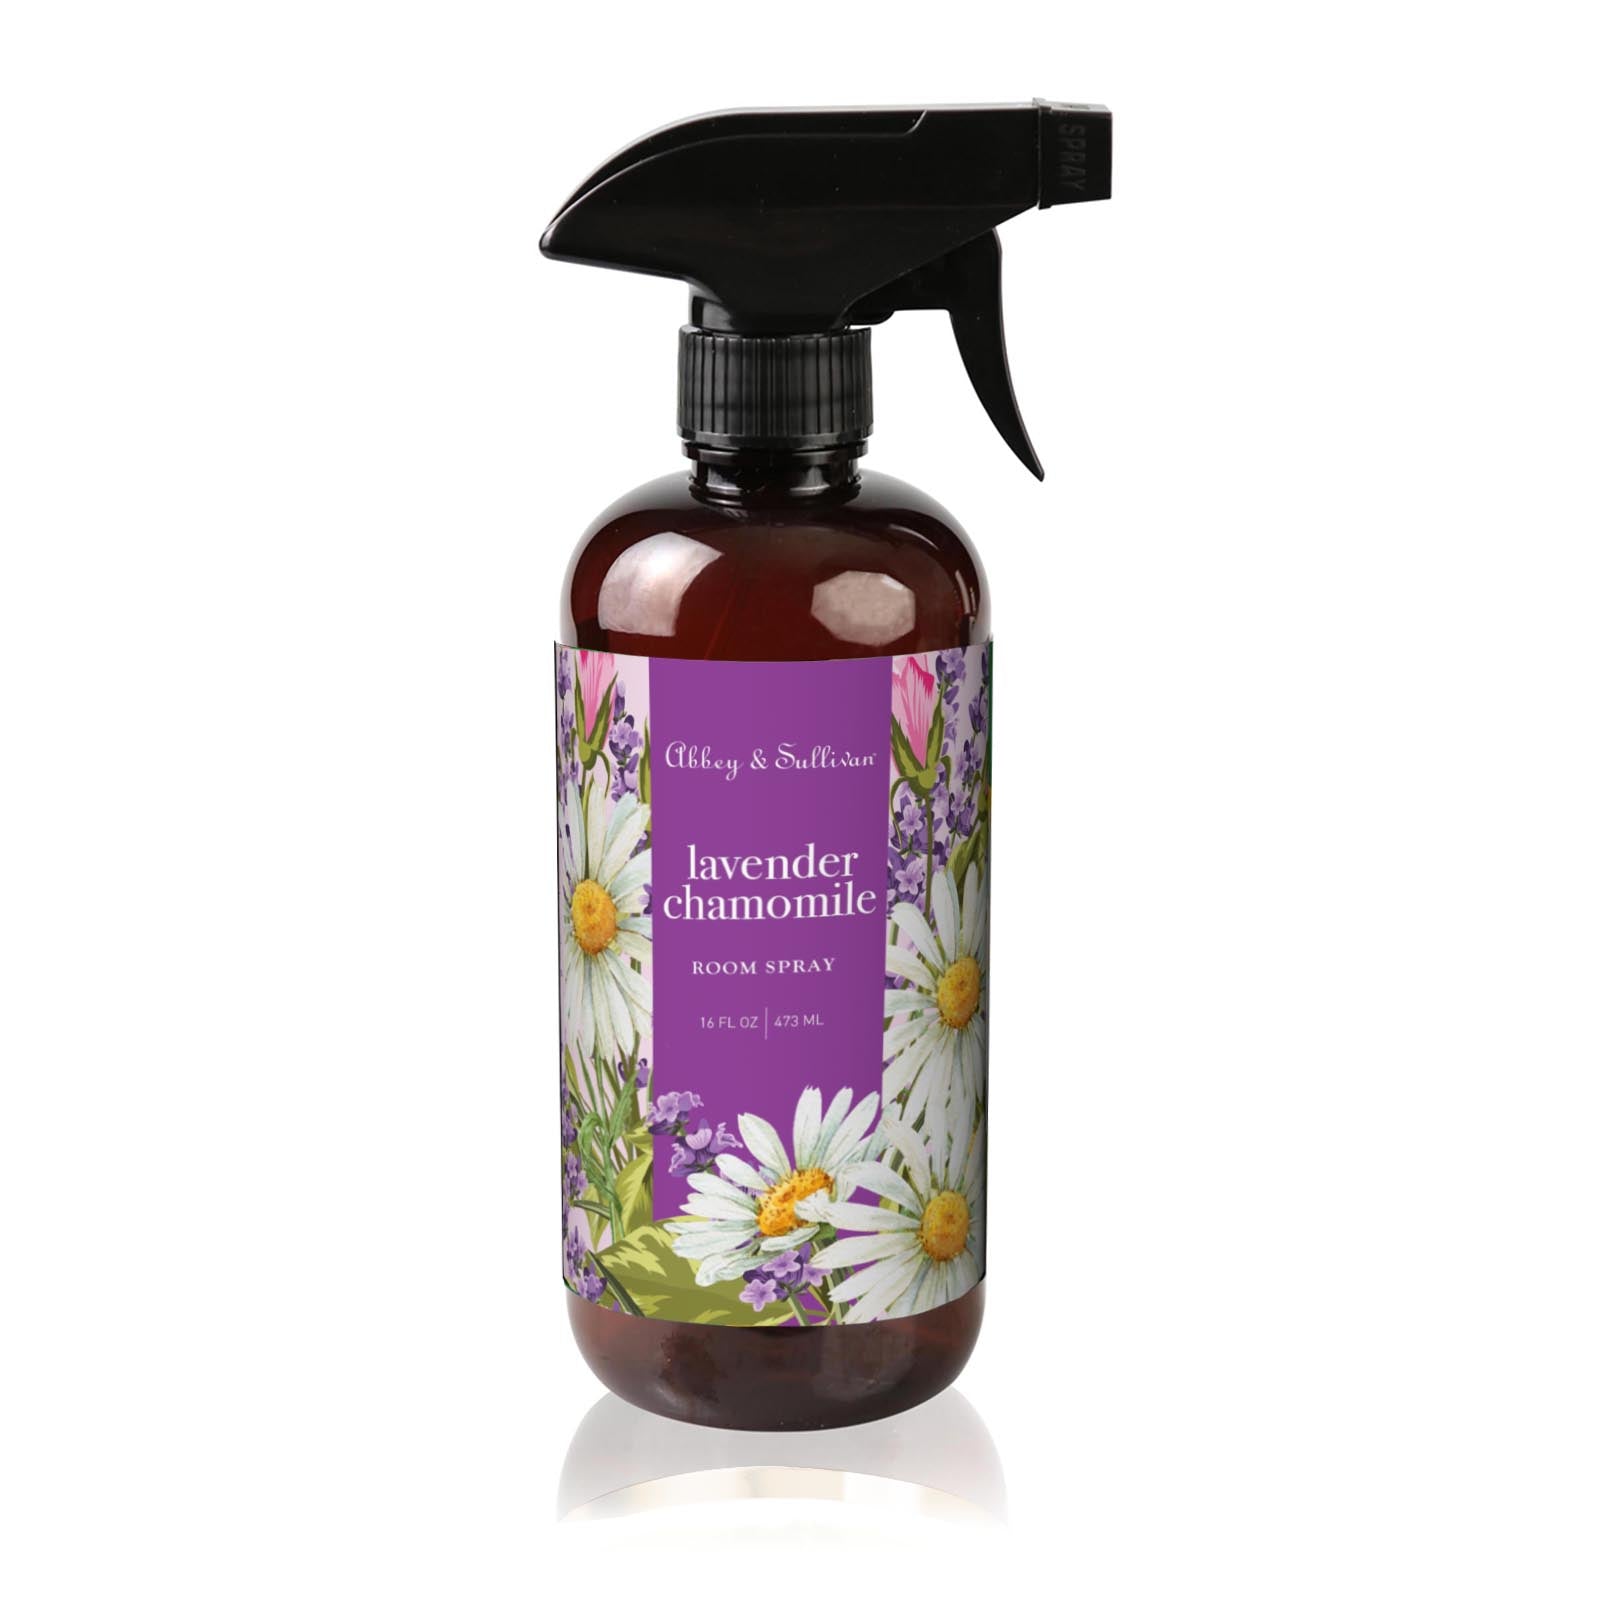 Best linen and room sprays - Lavender Chamomile